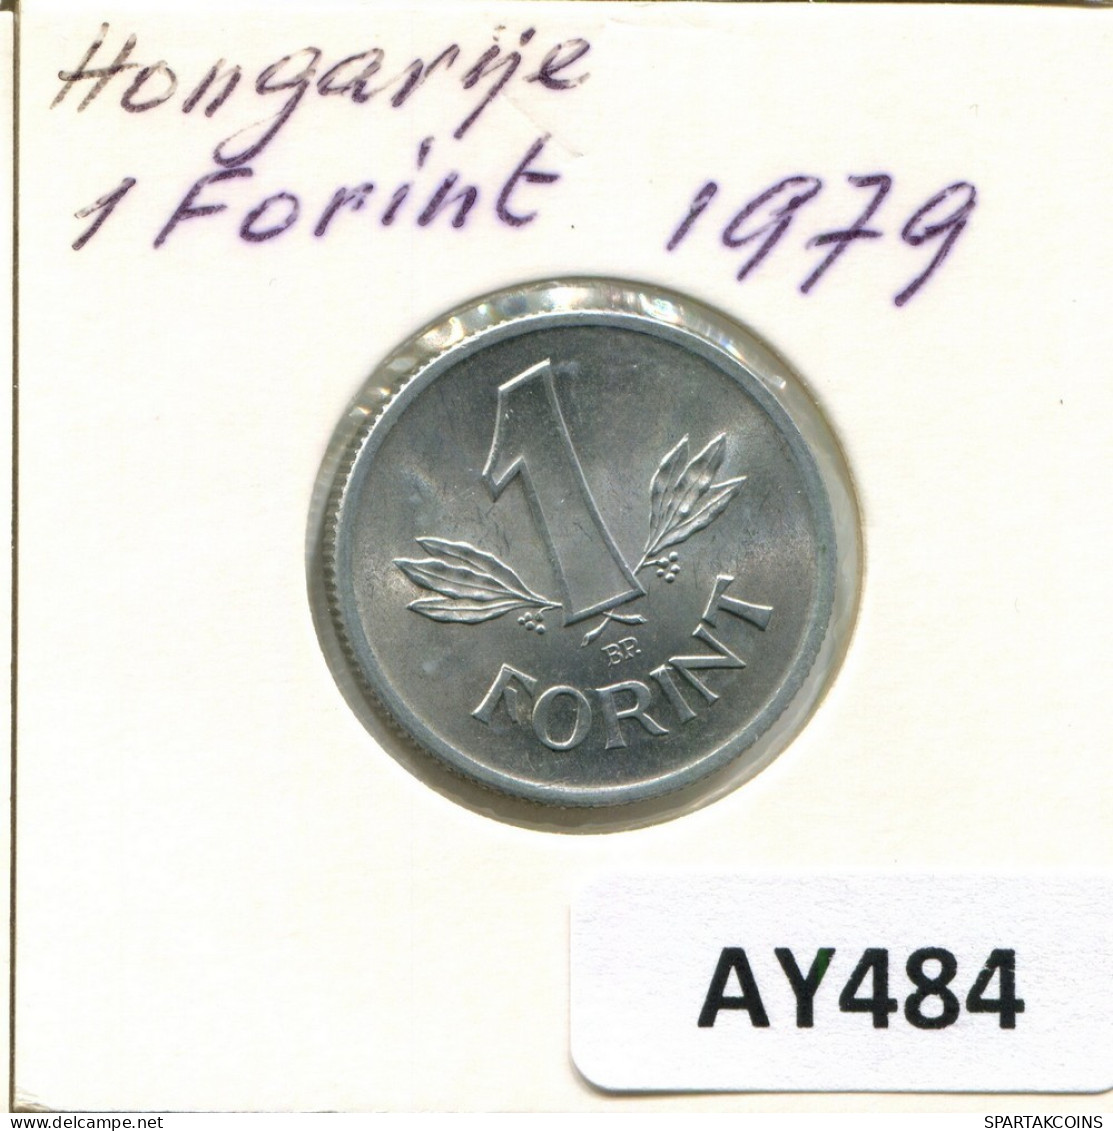 1 FORINT 1979 HUNGARY Coin #AY484.U.A - Hongarije